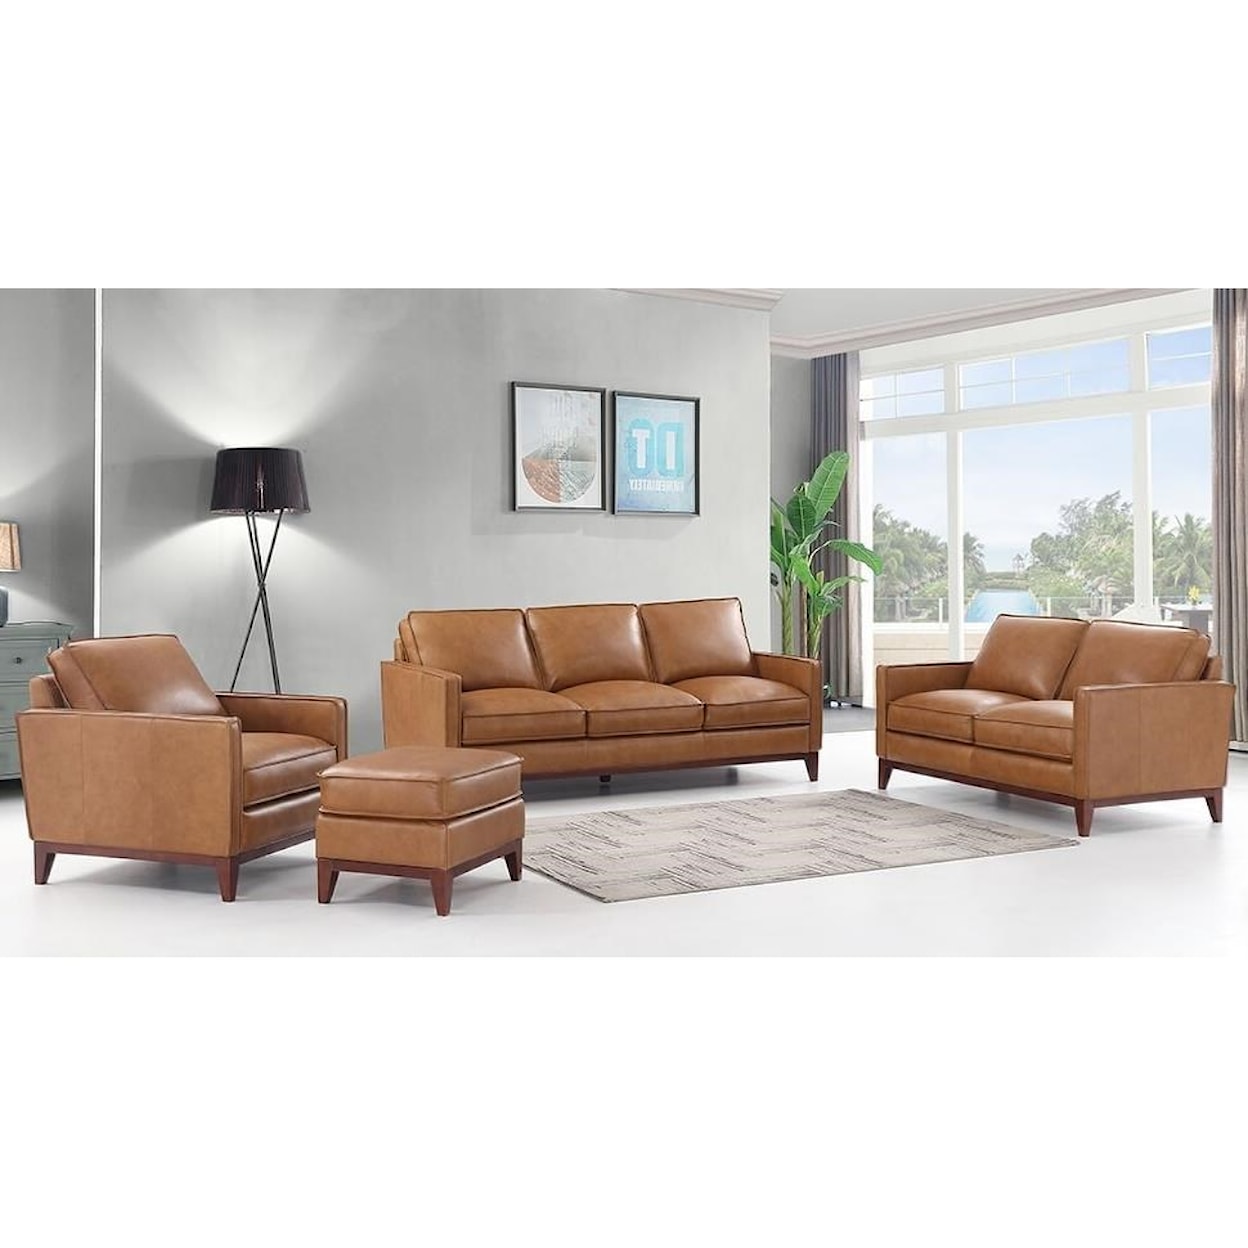 Leather Italia USA Newport Stationary Living Room Group